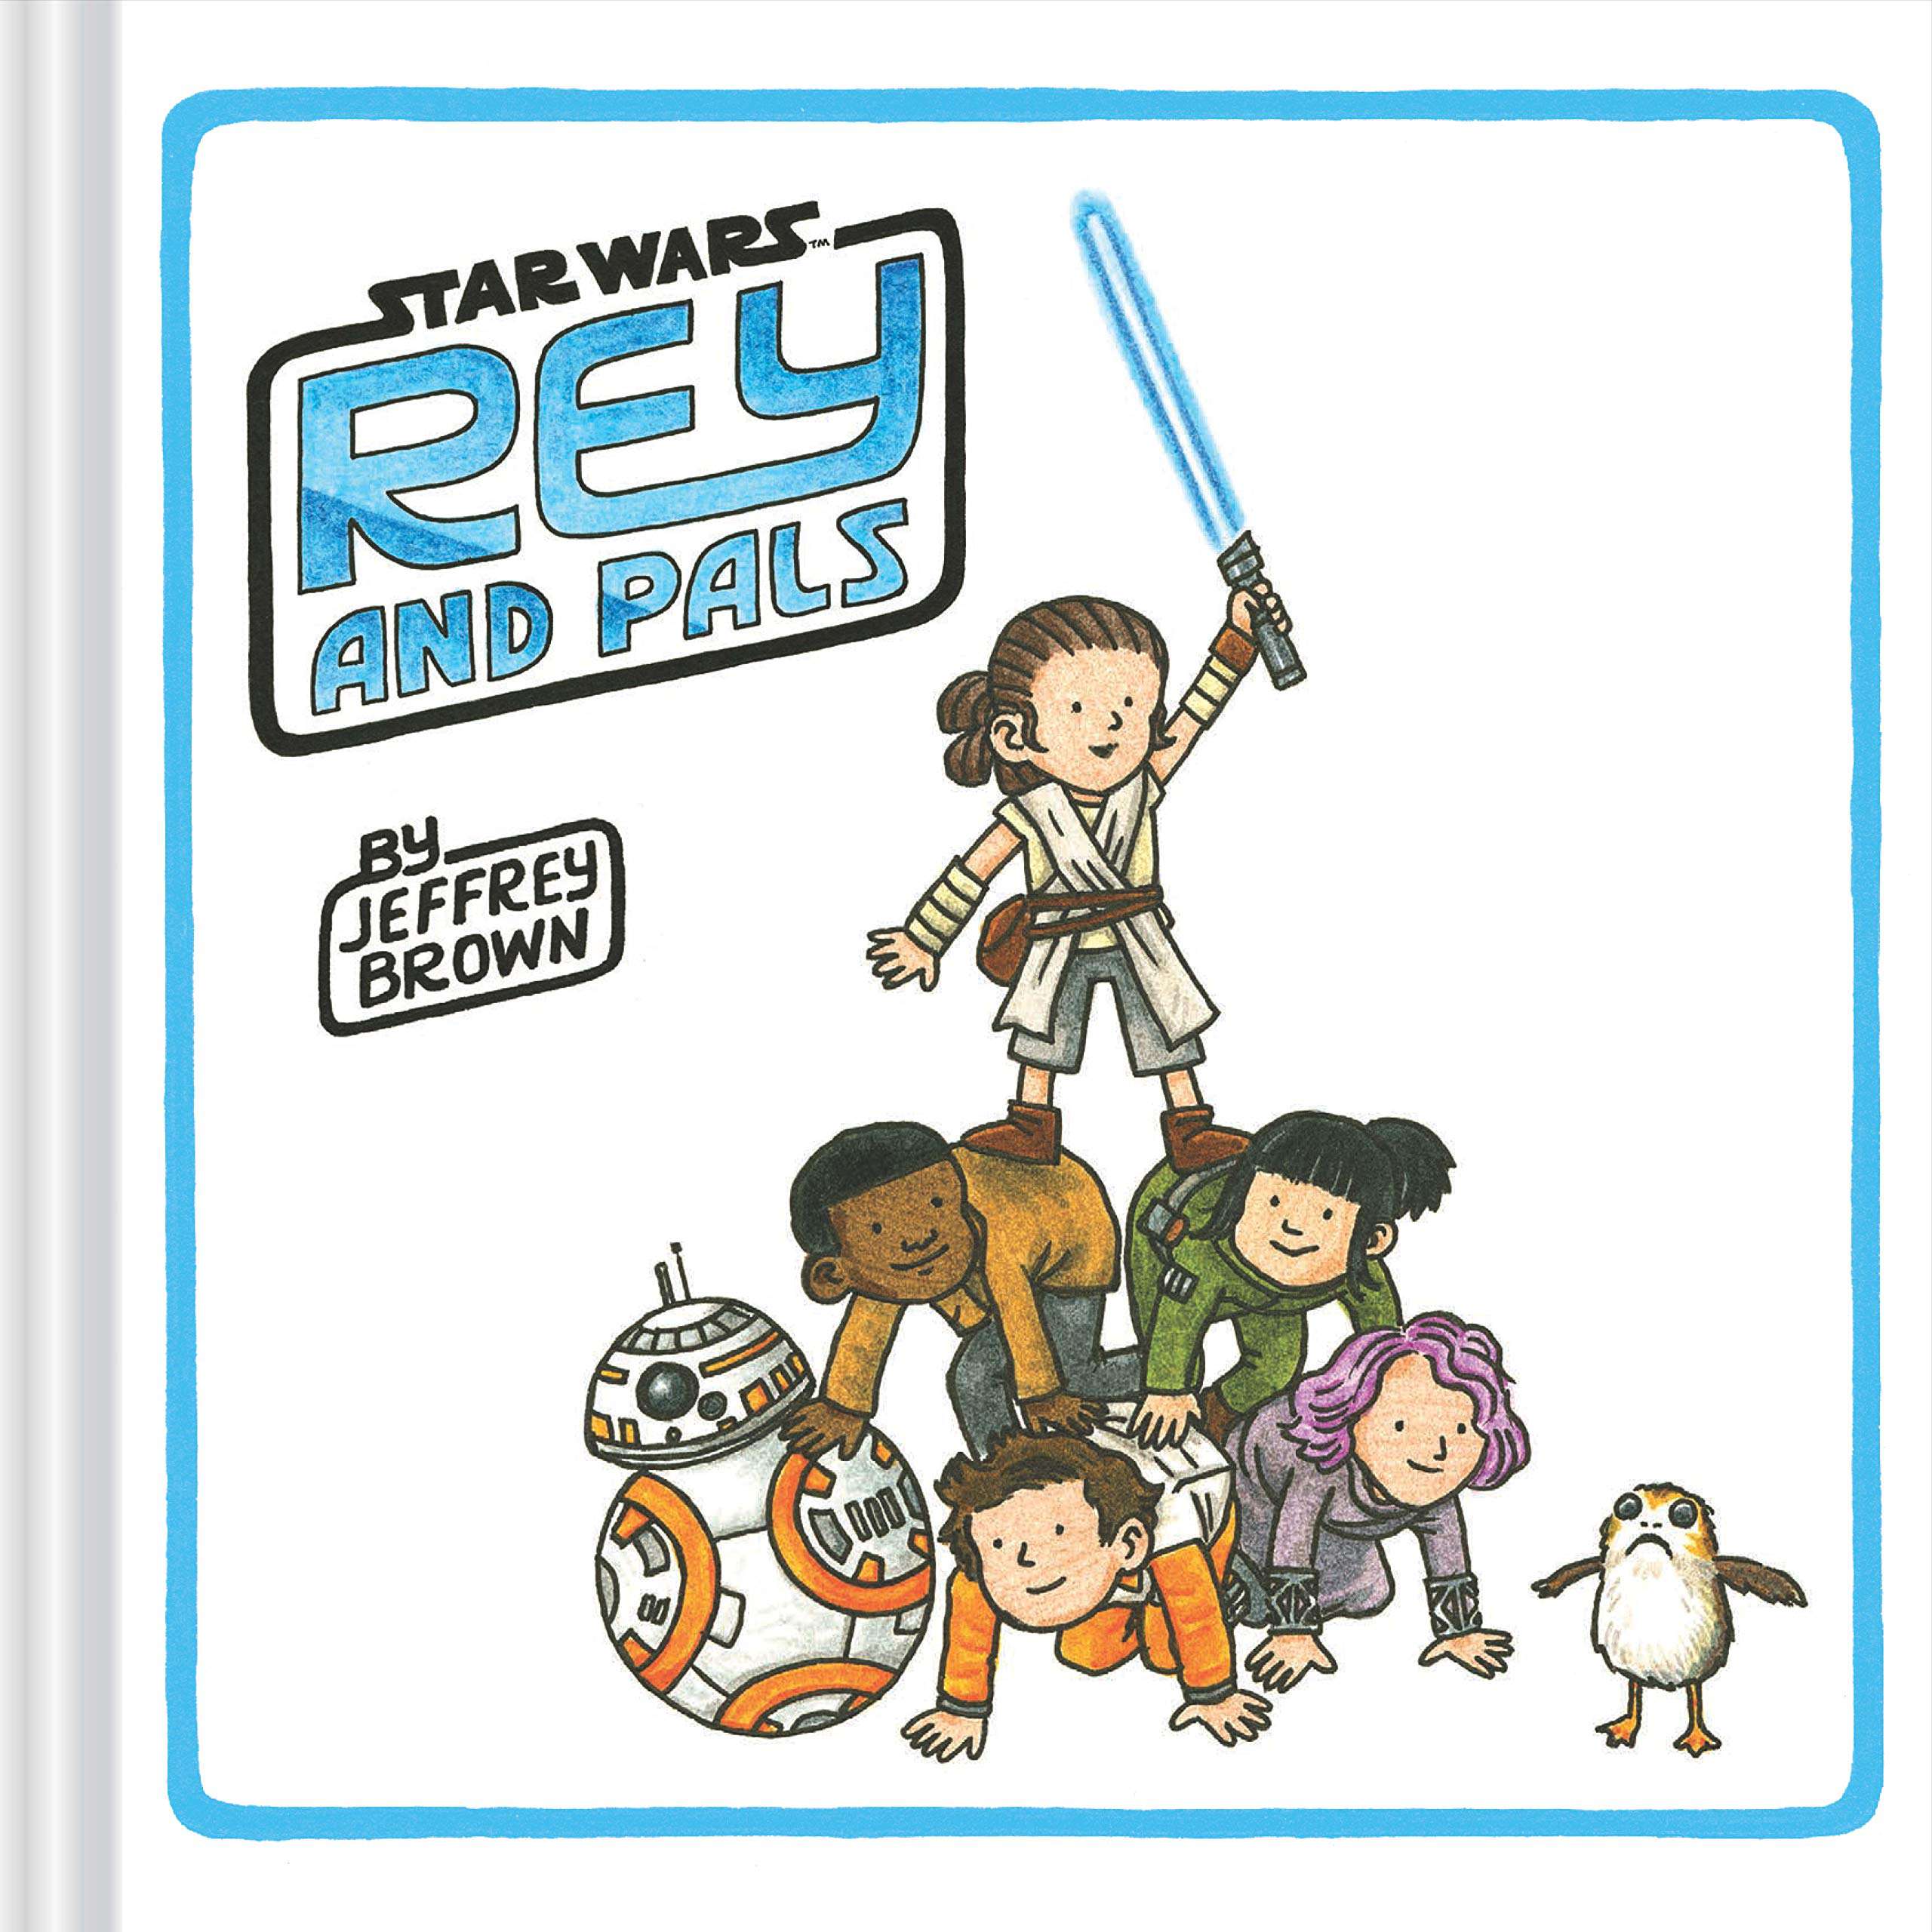 英文原版星球大战蕾伊和朋友们 Jeffrey Brown幽默绘本 Rey and Pals(Star Wars)